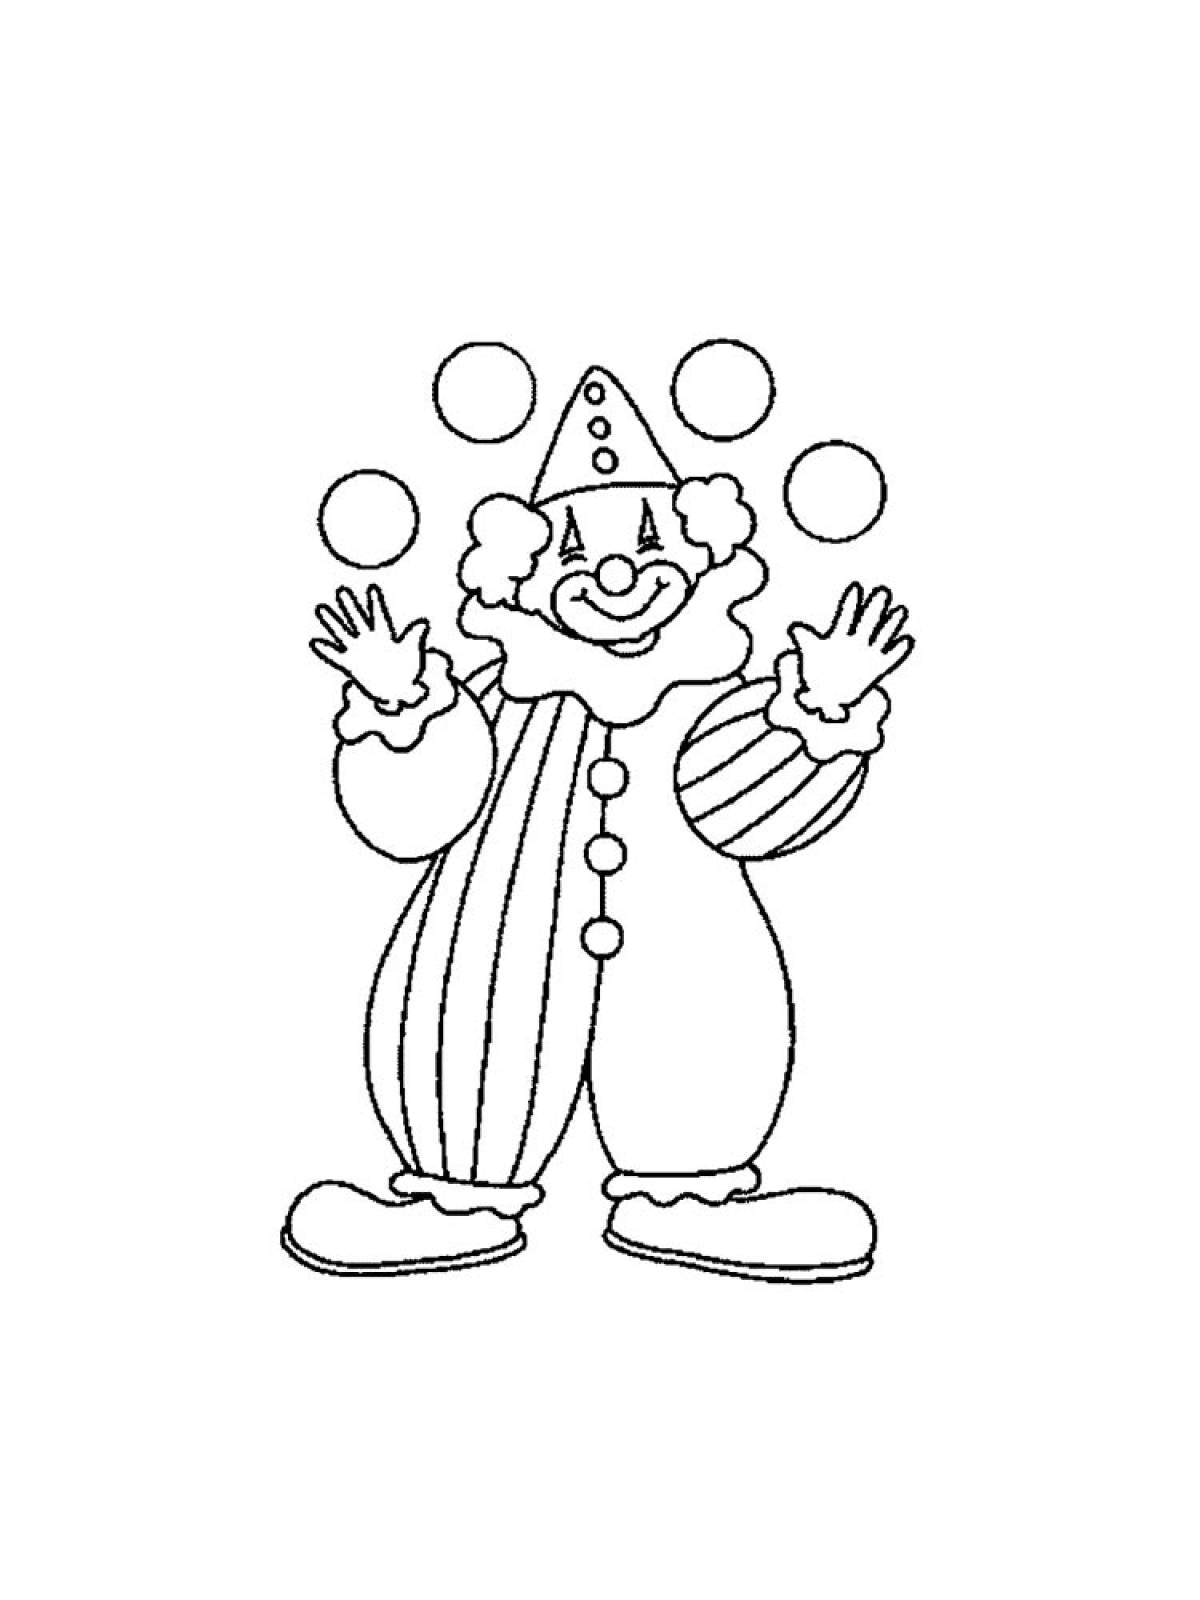 Клоун раскраска для детей 4 5. Клоун раскраска. Веселый клоун раскраска. Клоун раскраска для детей. Рисование клоуна.